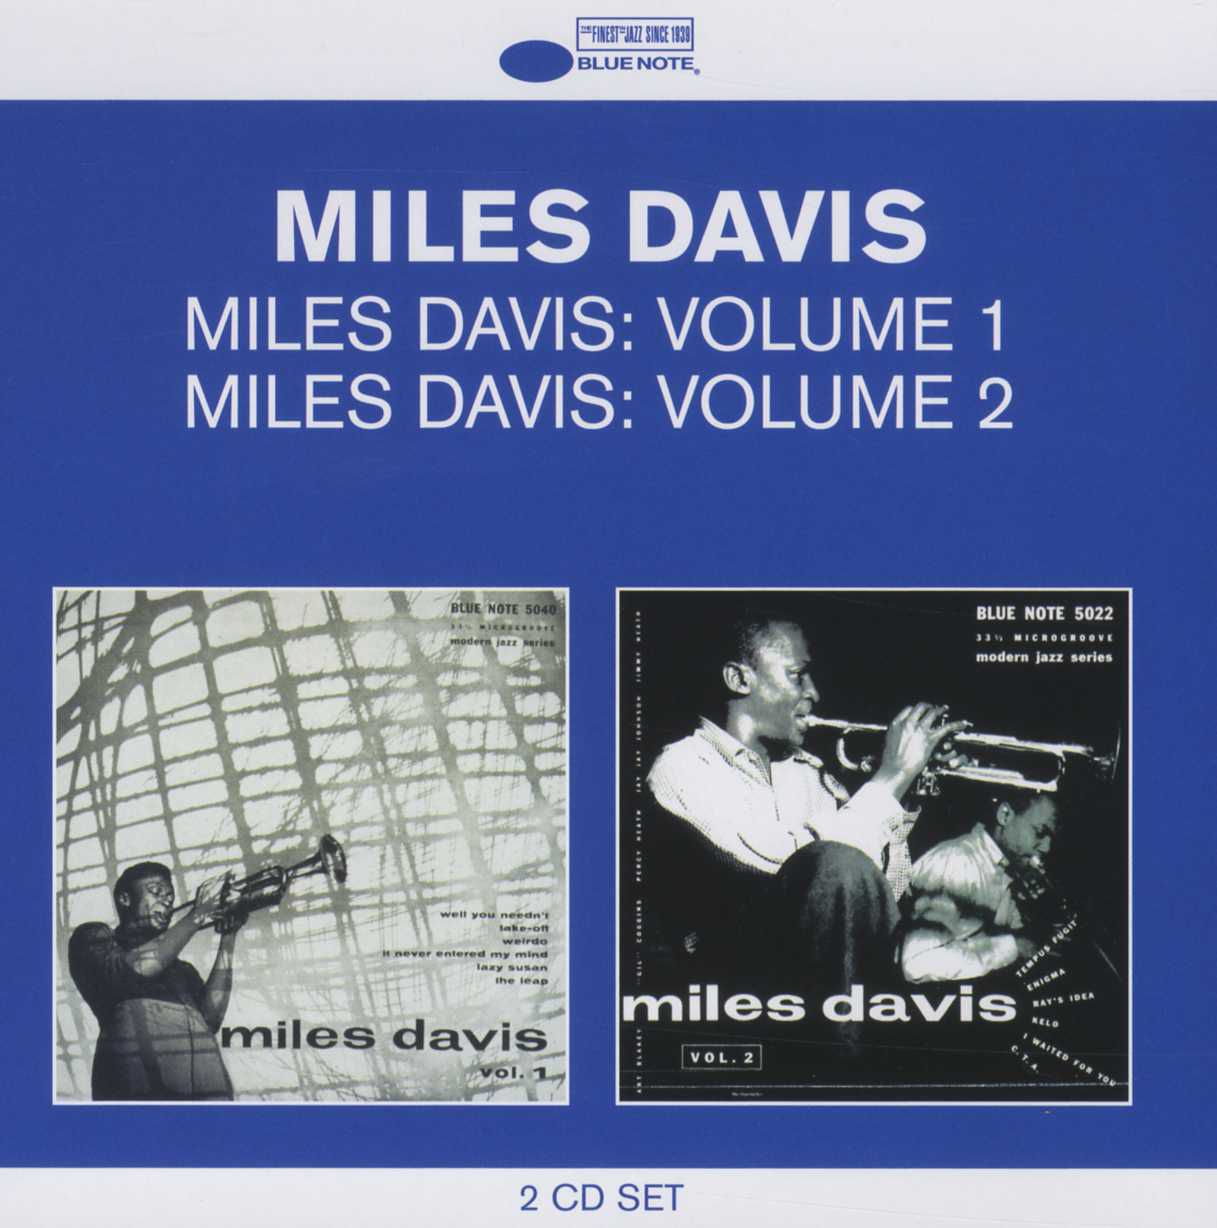 miles davis discography rym